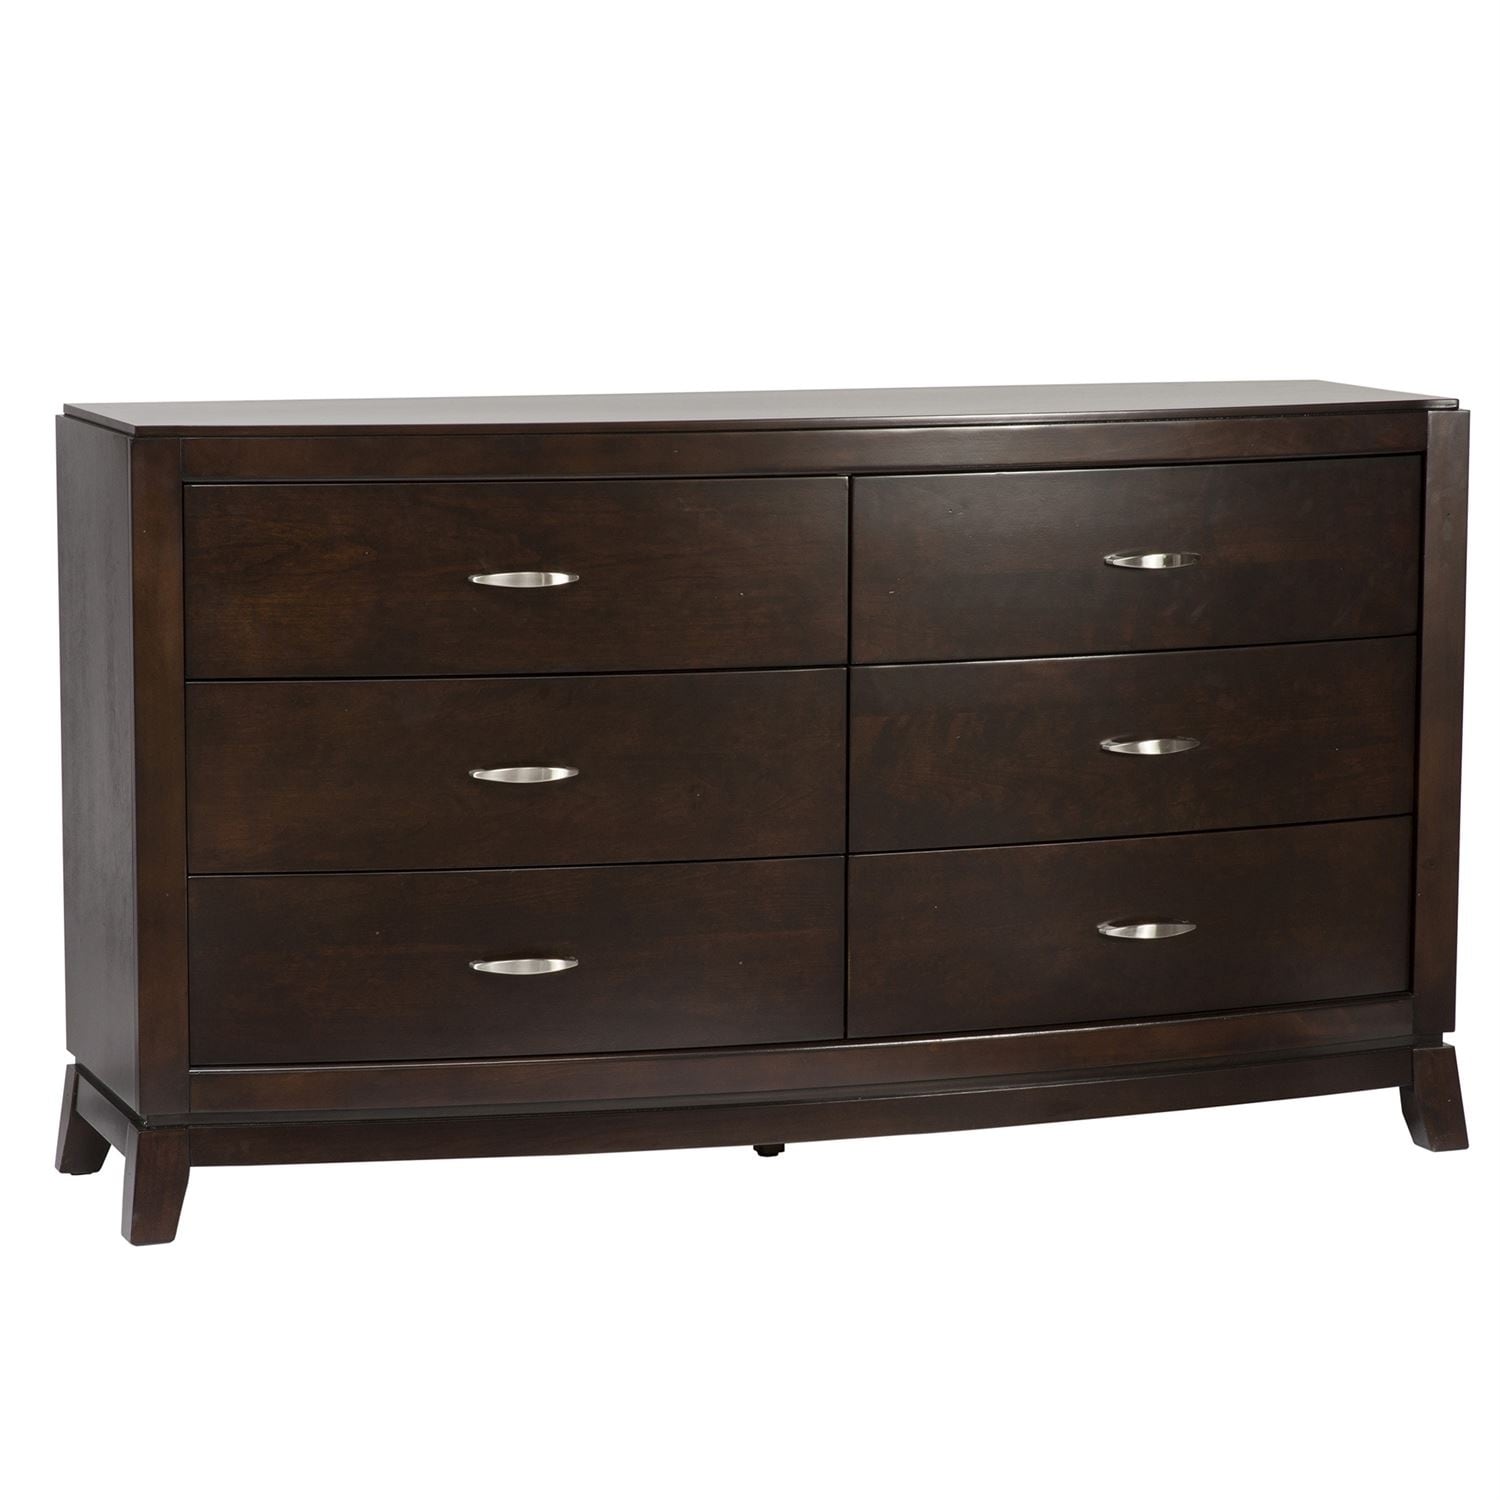 Liberty Furniture Industries Liberty Avalon Dark Truffle 6 drawer Dresser Cherry Size 6 drawer